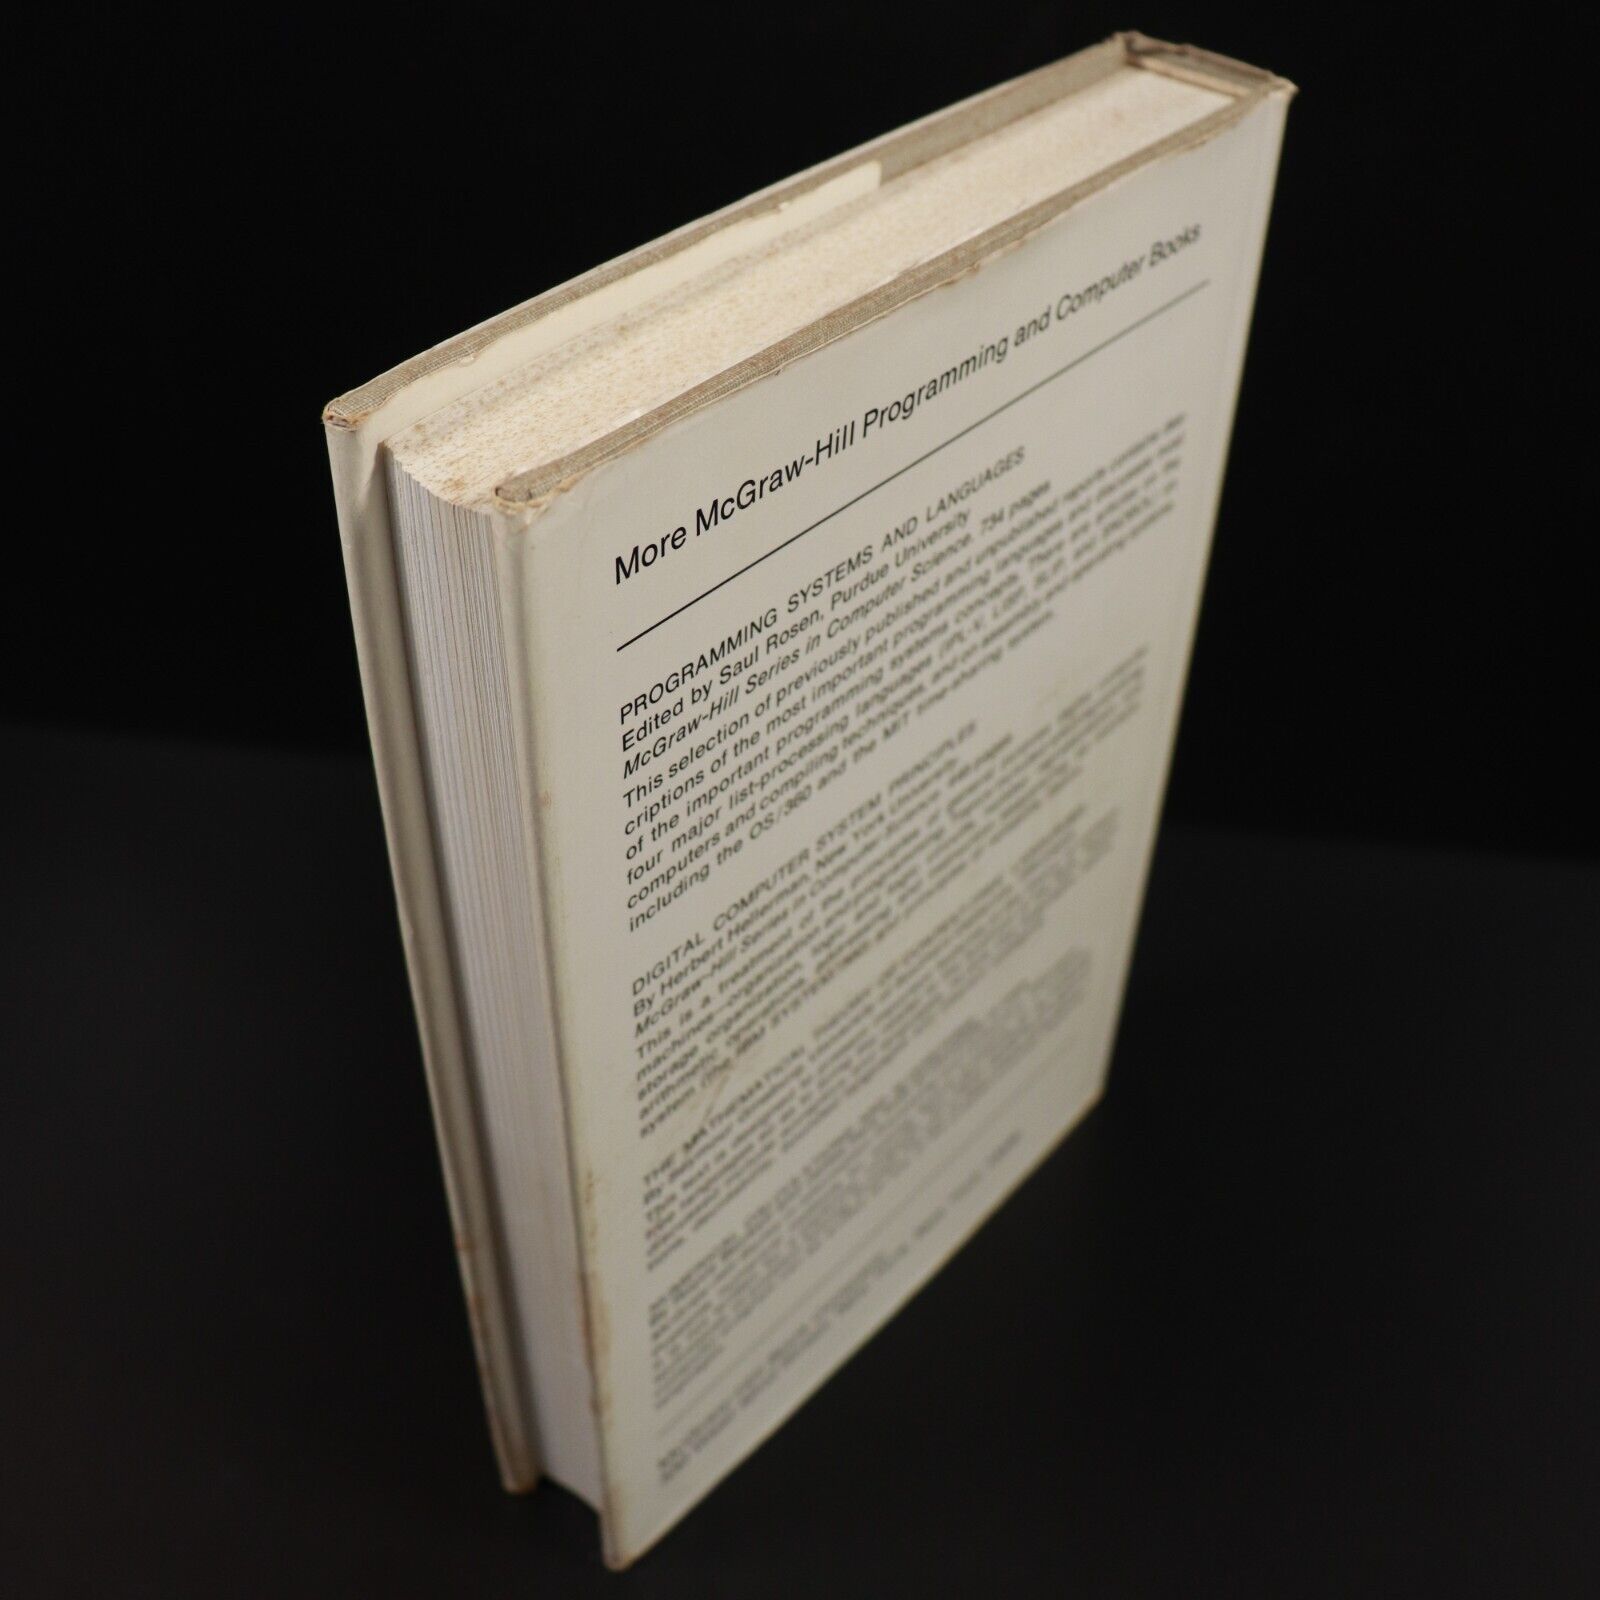 1968 Programming Languages by Peter Wegner Vintage Computer Science Book